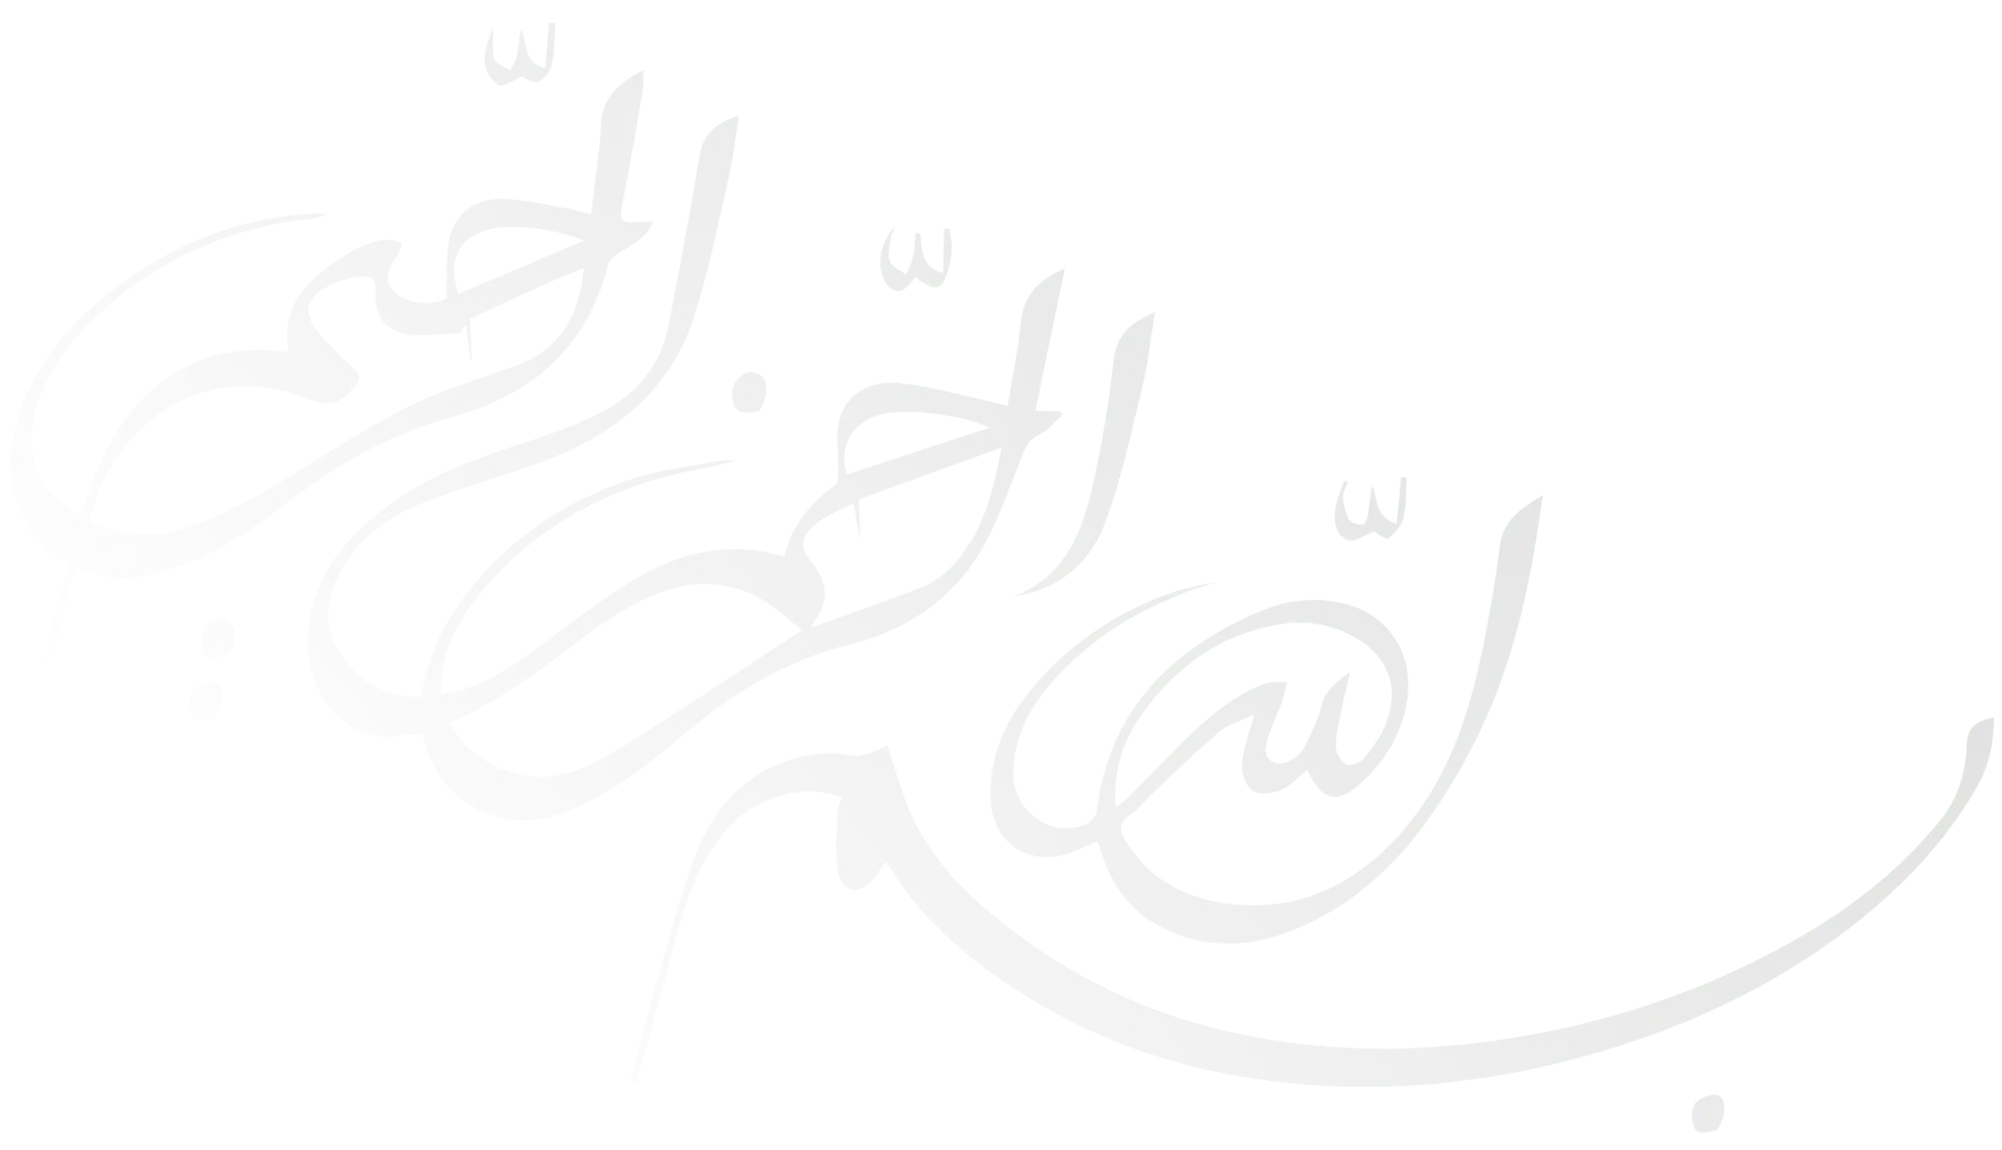 calligraphy design